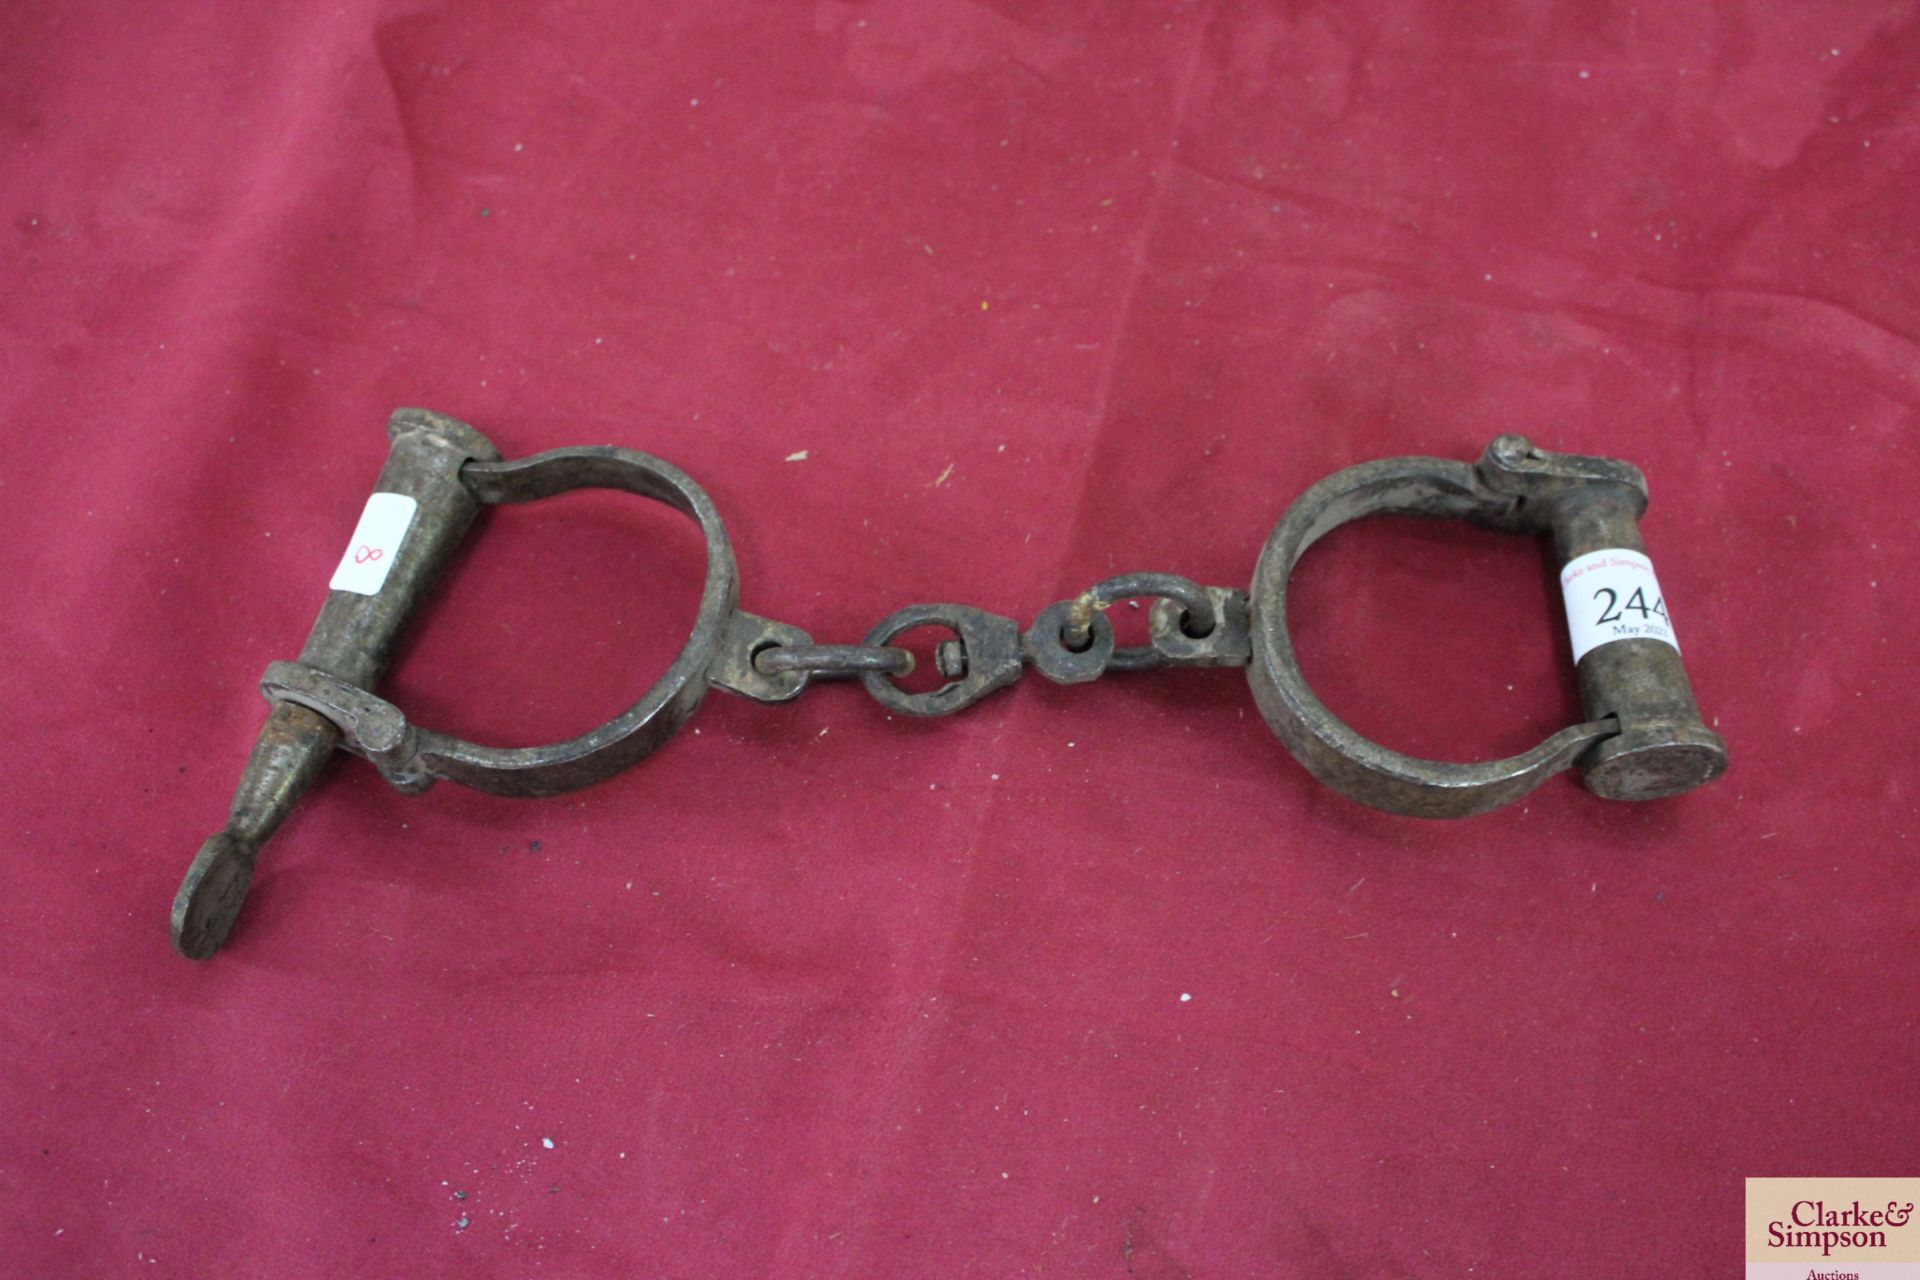 Pair of handcuffs. V